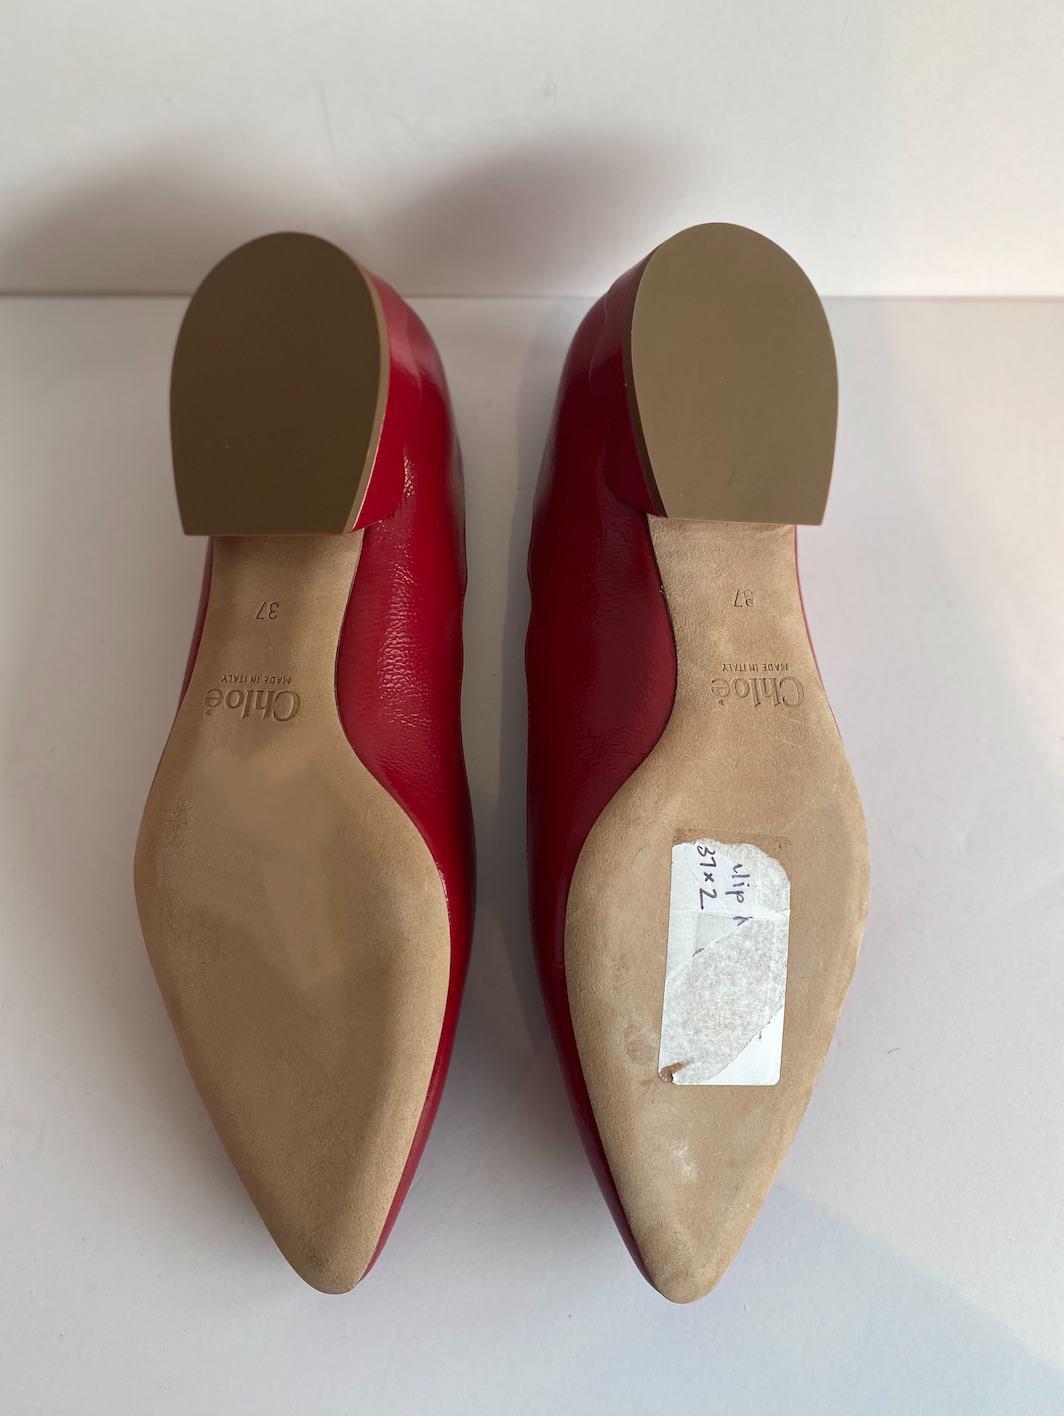 Chloe Scalloped Ballet Flats Red Patent Bottom